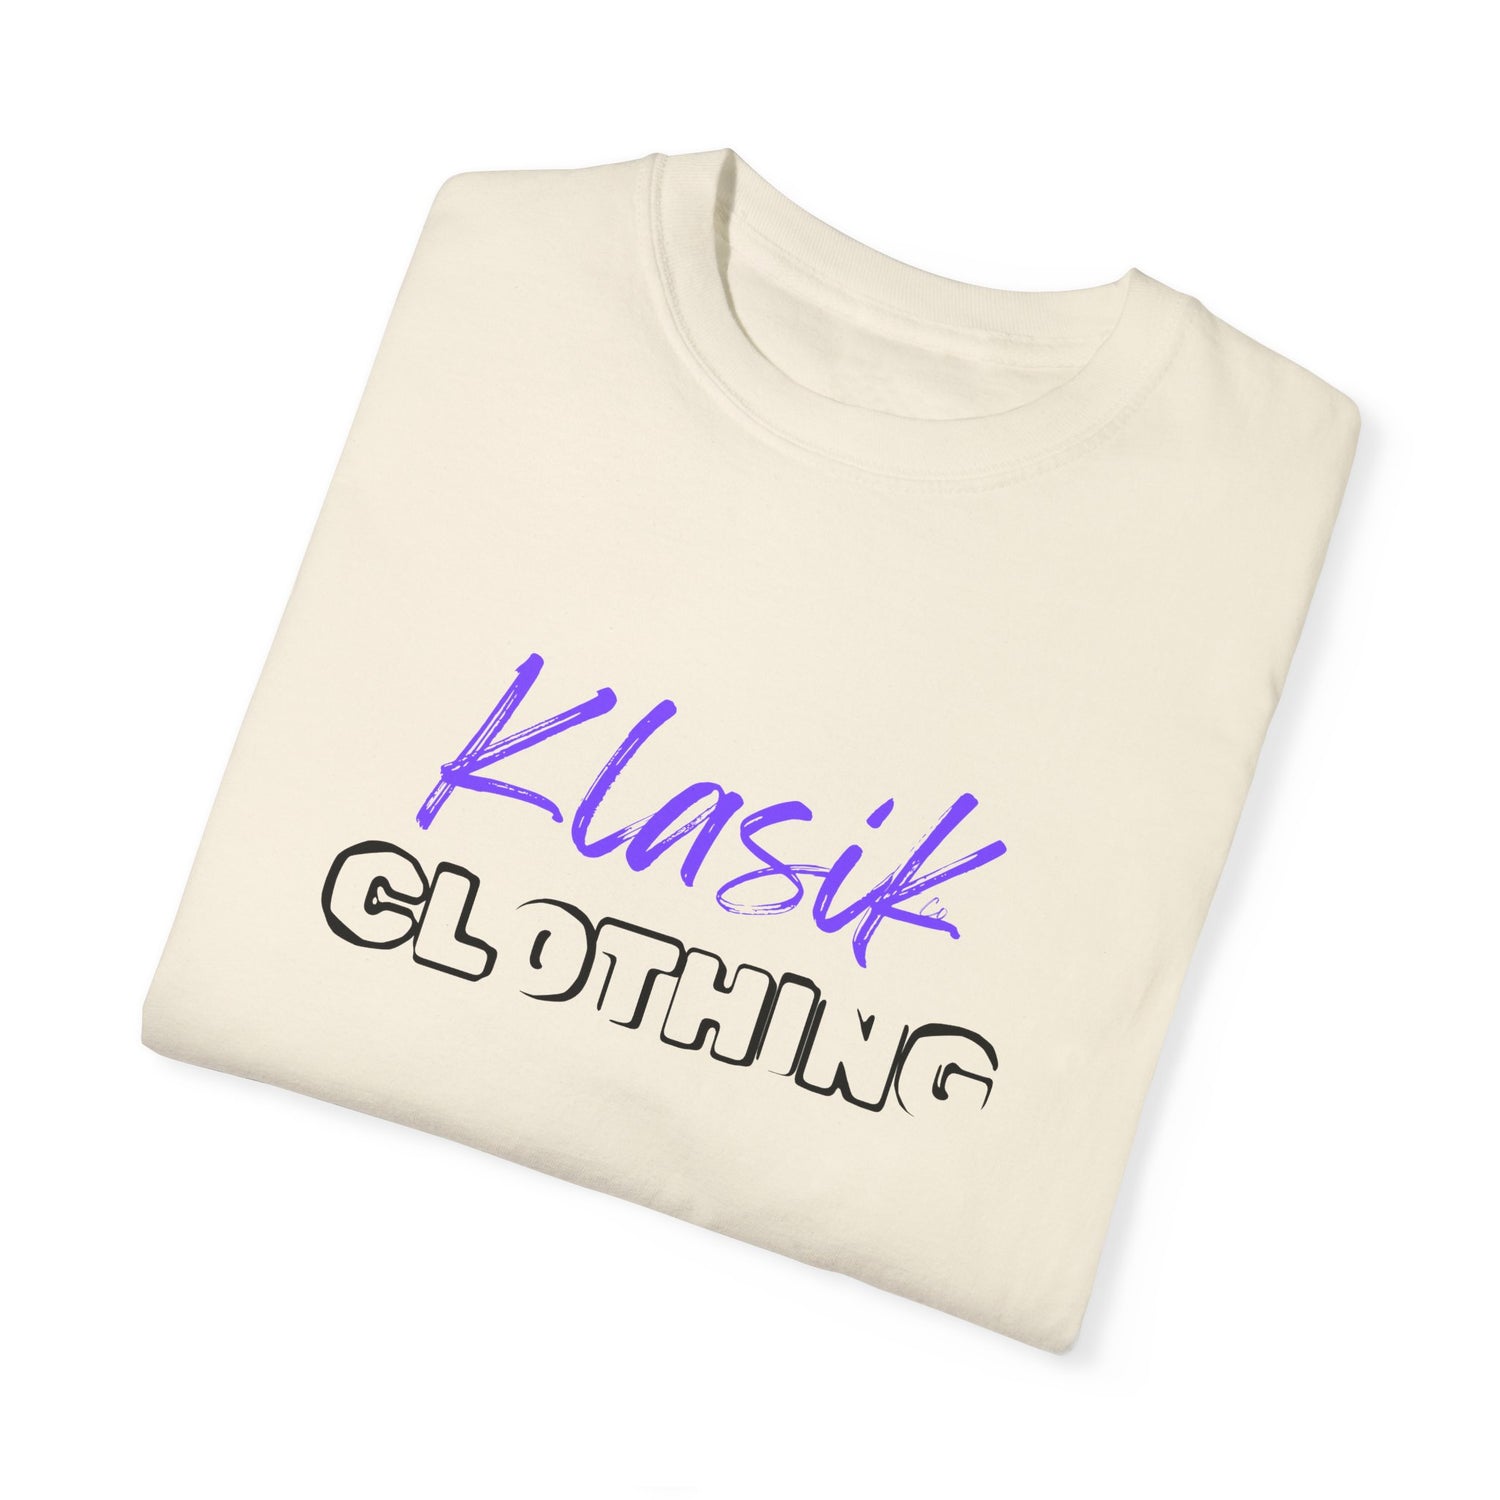 Klasik Clothing - Comfort Colors T-shirt